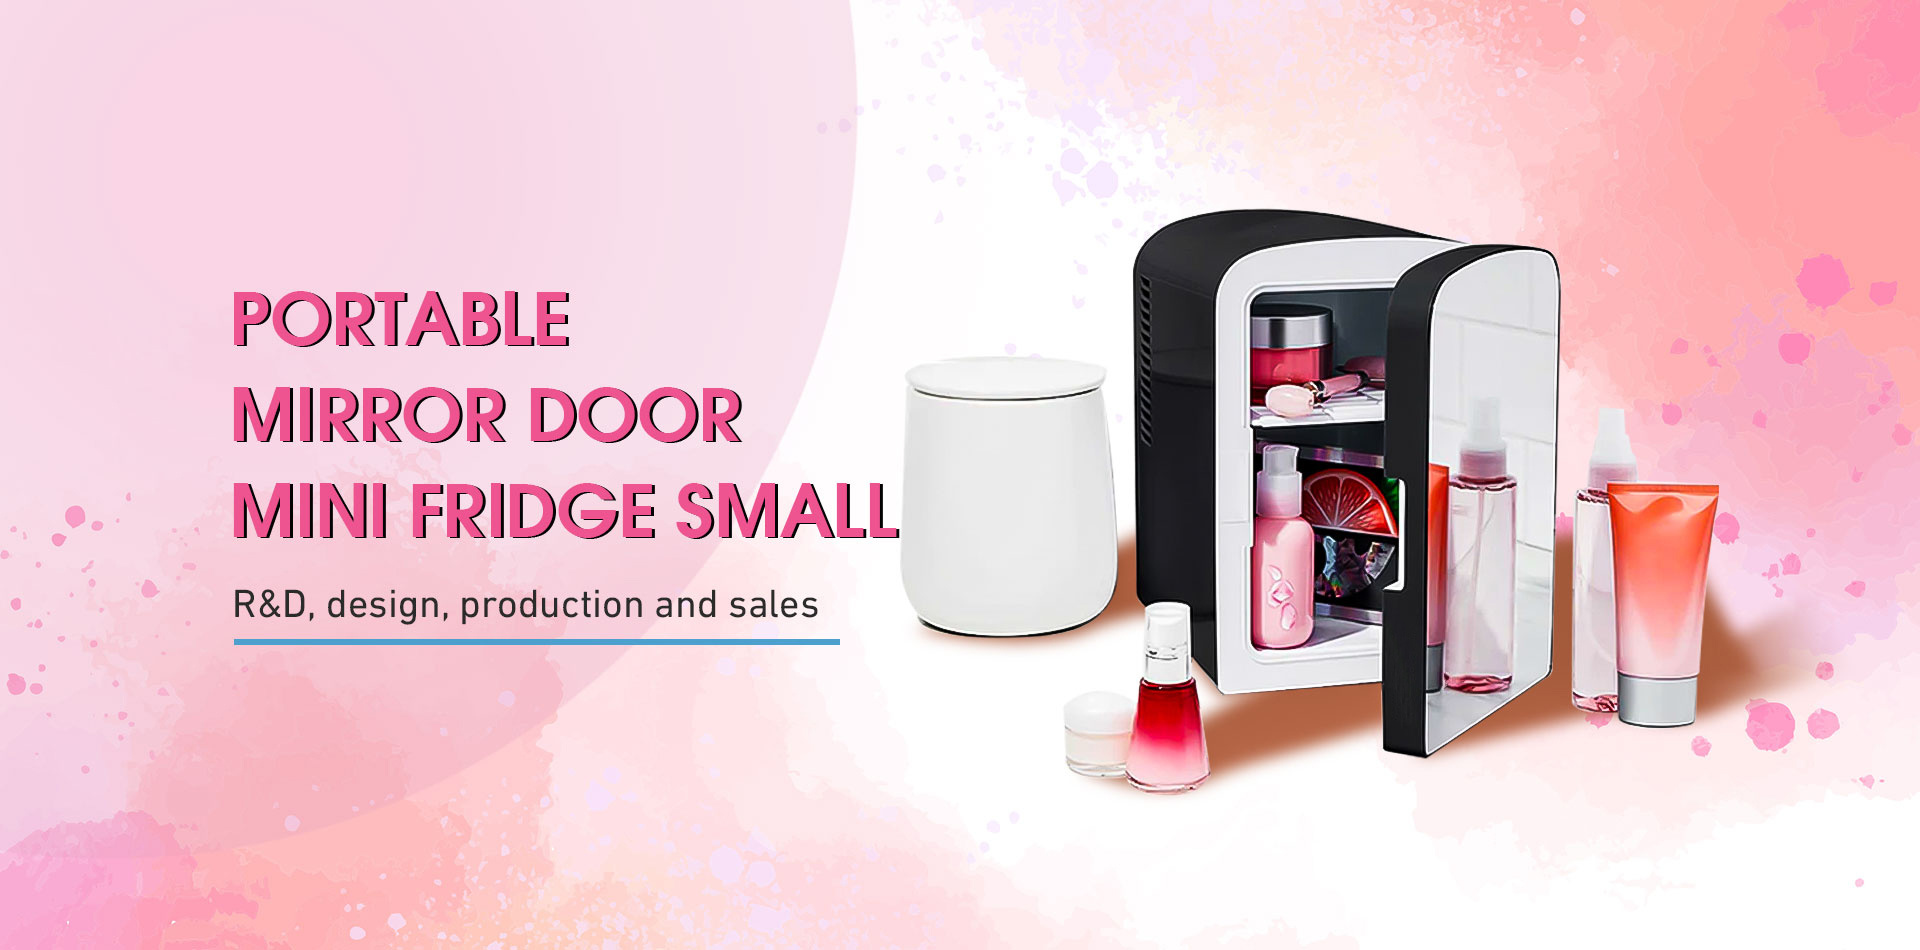 Portable mirror door mini fridge small